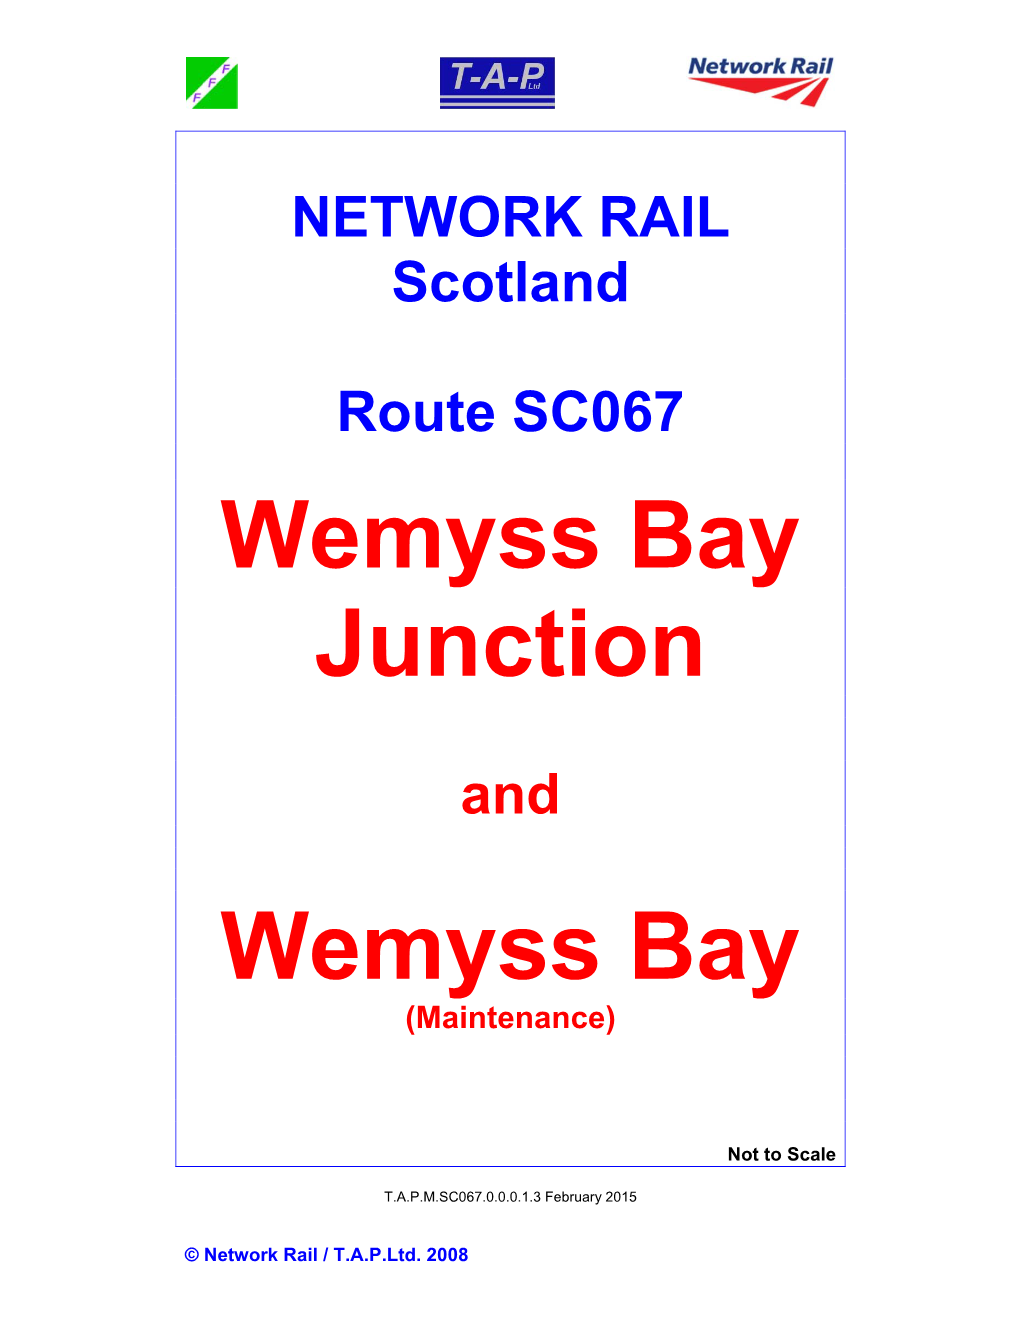 Wemyss Bay Junction Wemyss